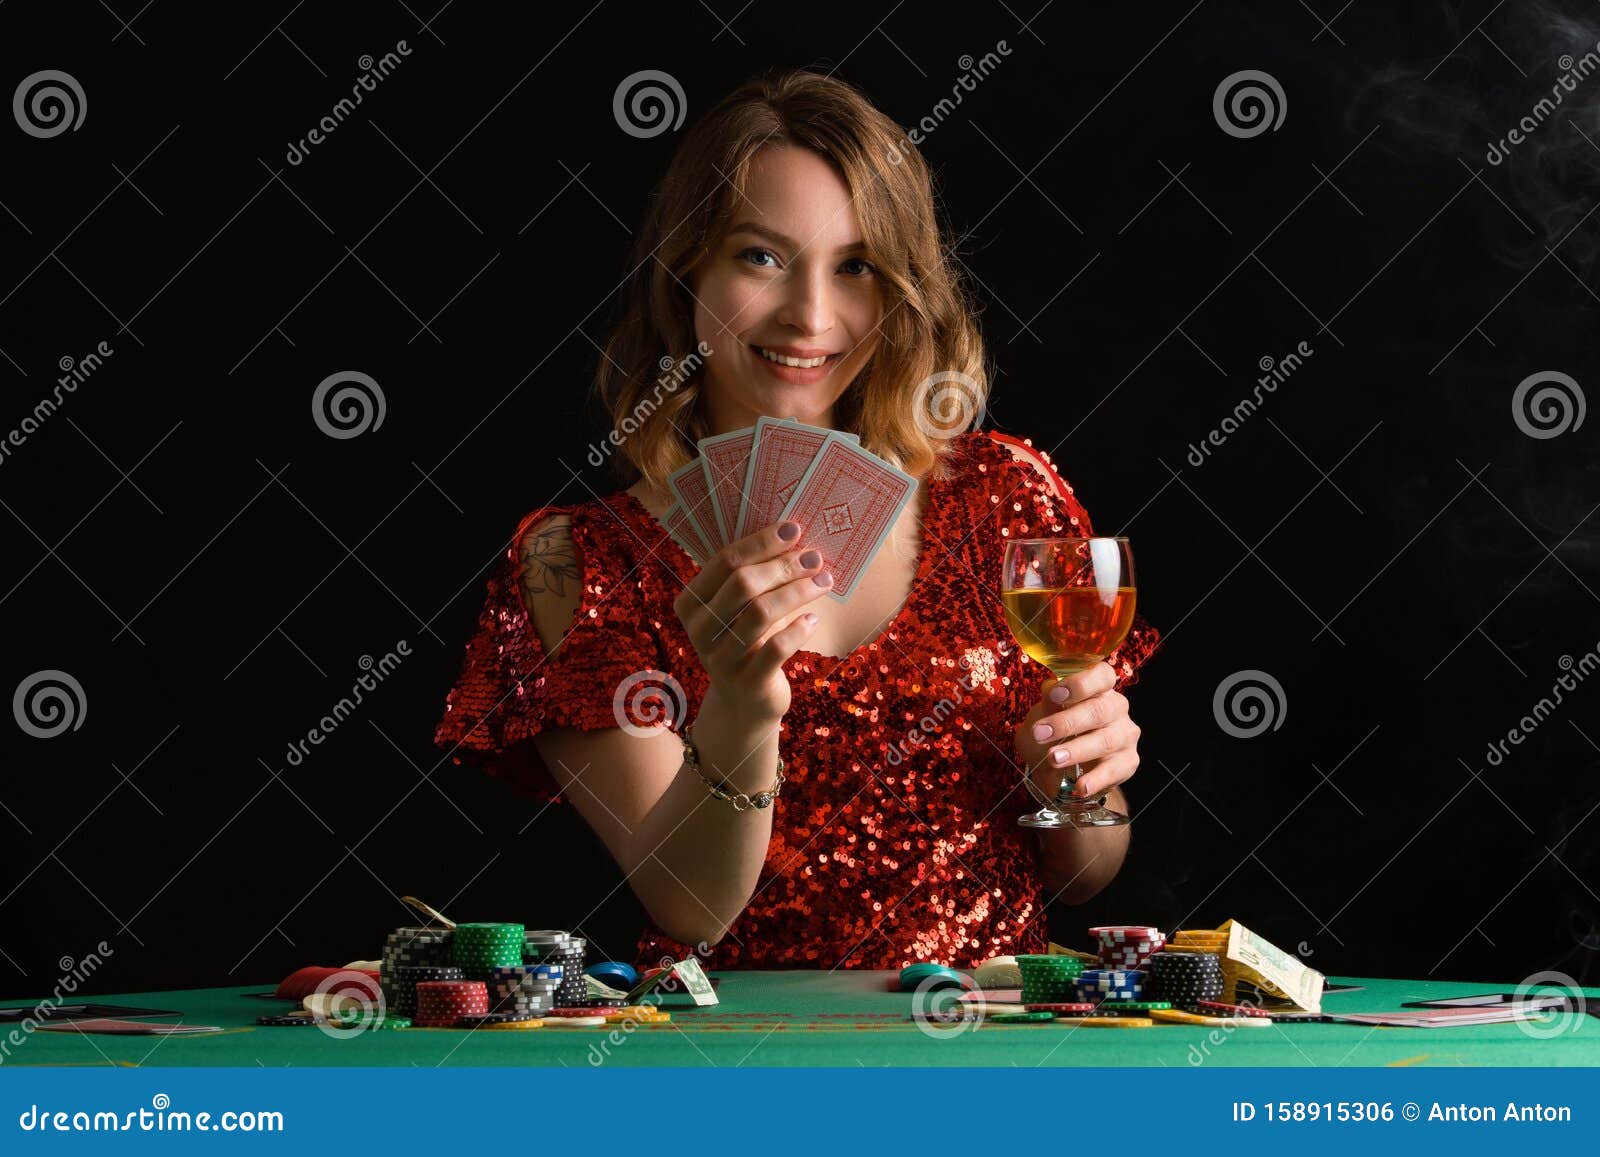 LATEST USA No Deposit Casino Bonus Codes November 